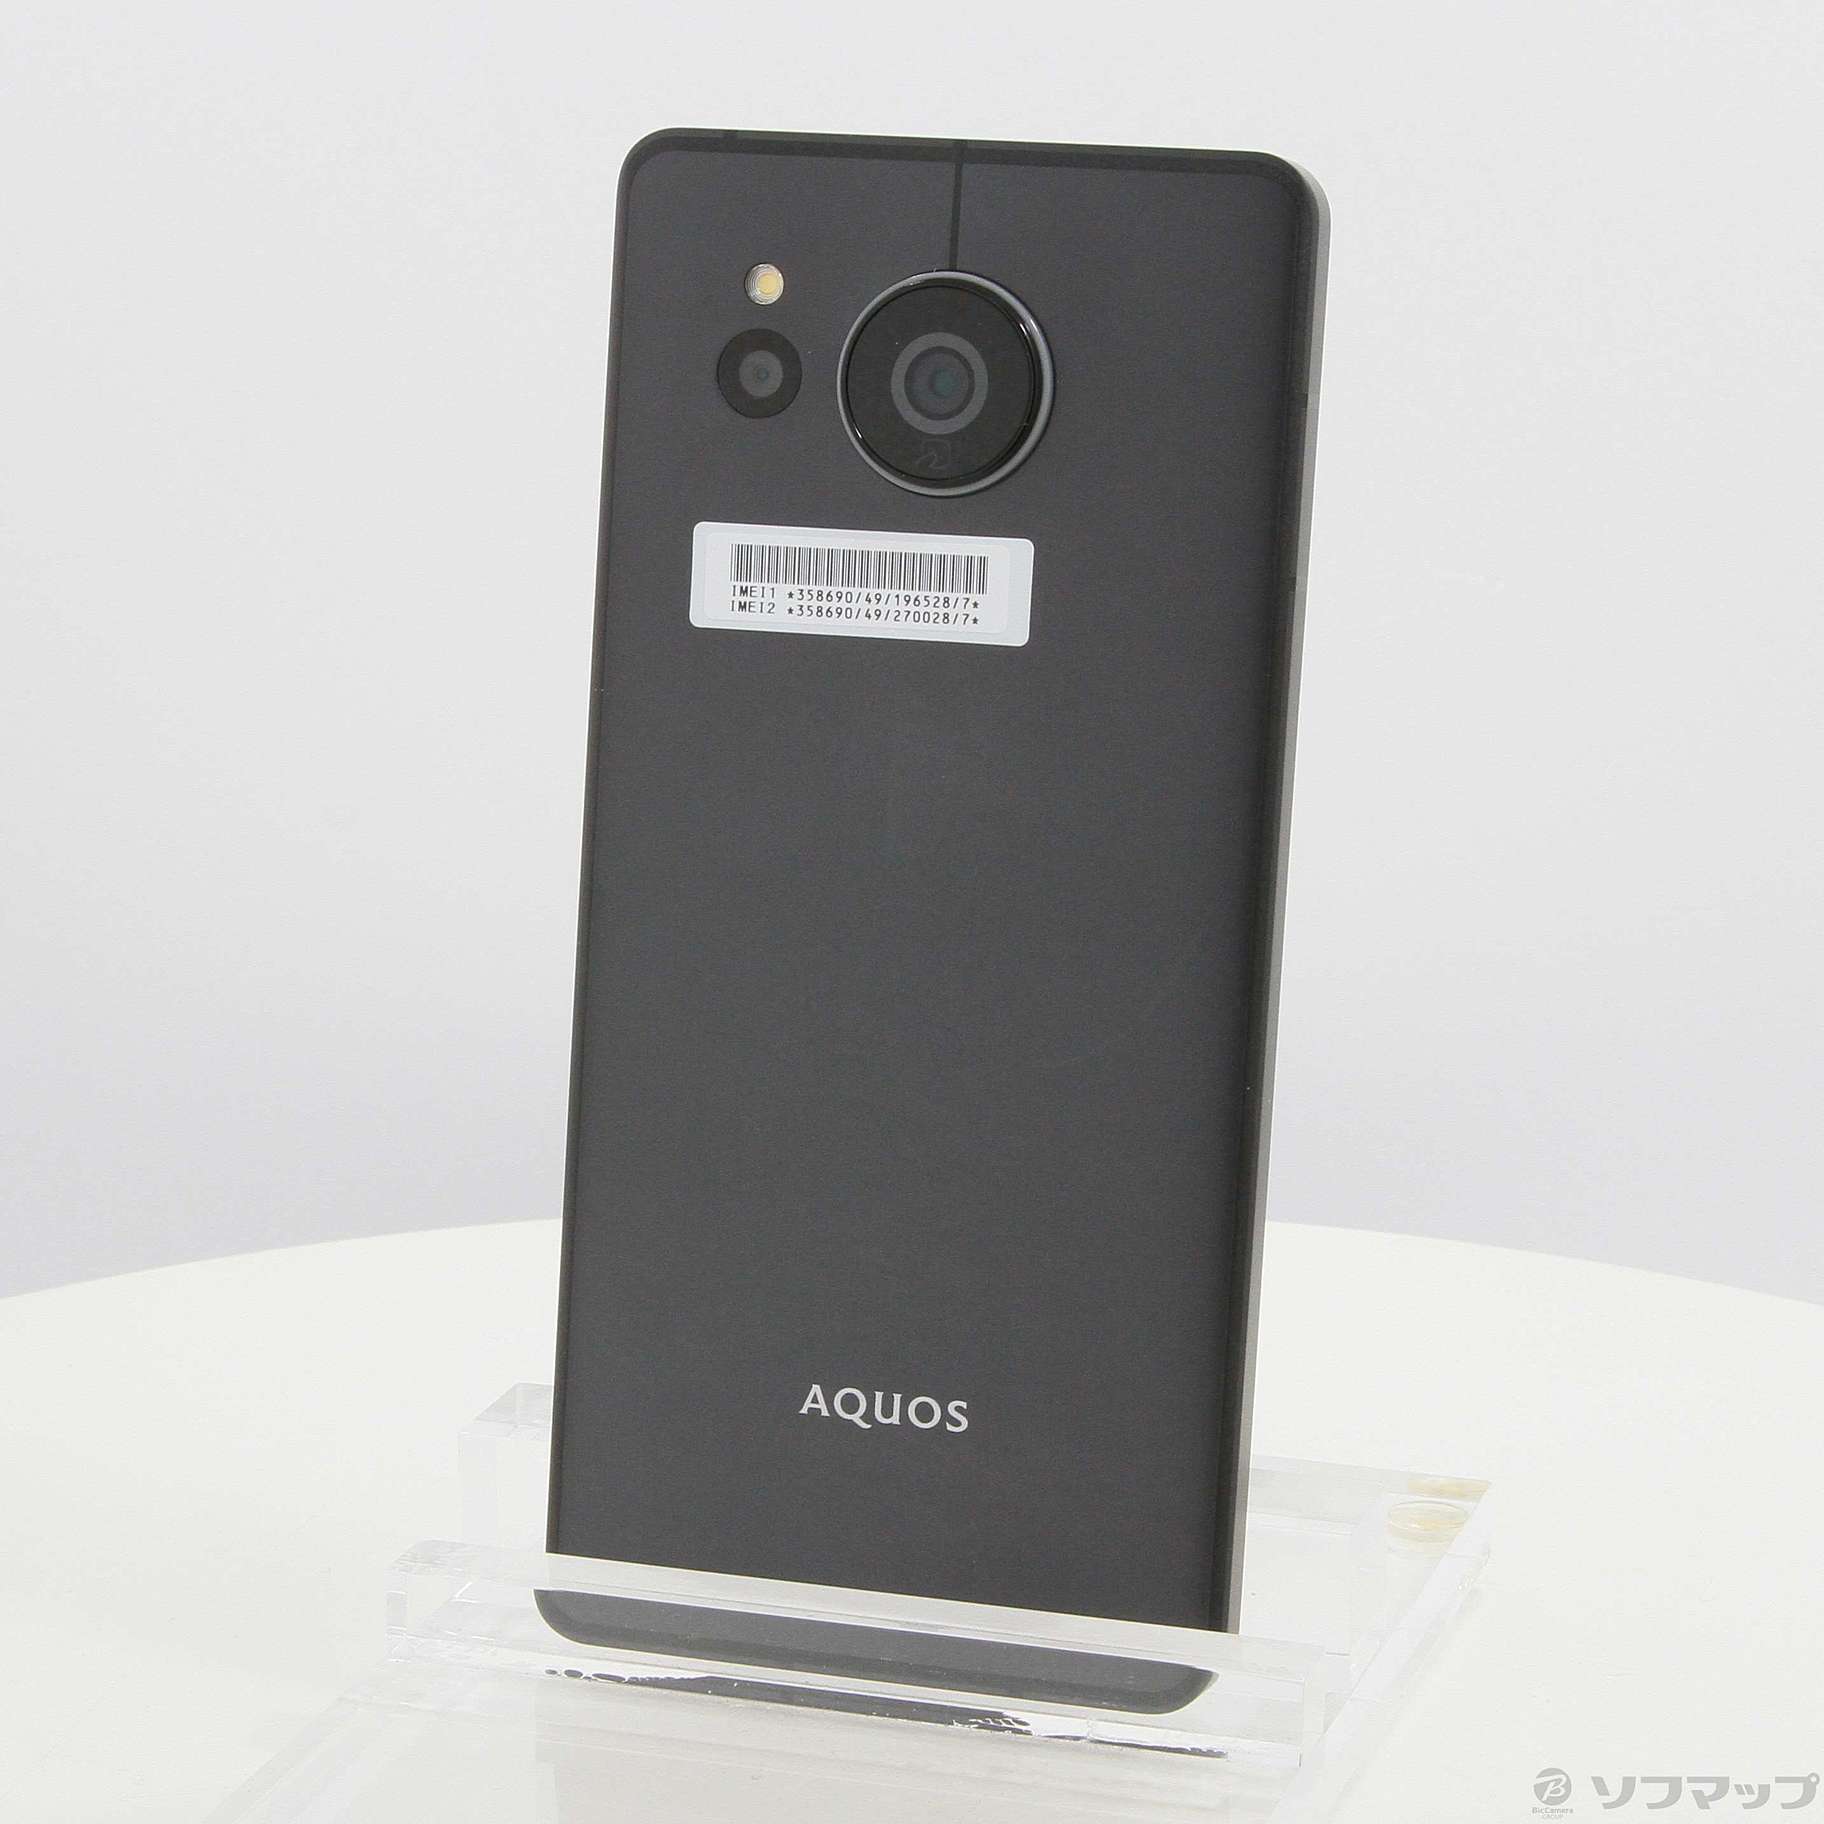 AQUOS sense7 plus 128GB ブラック SHSJJ3 SoftBank